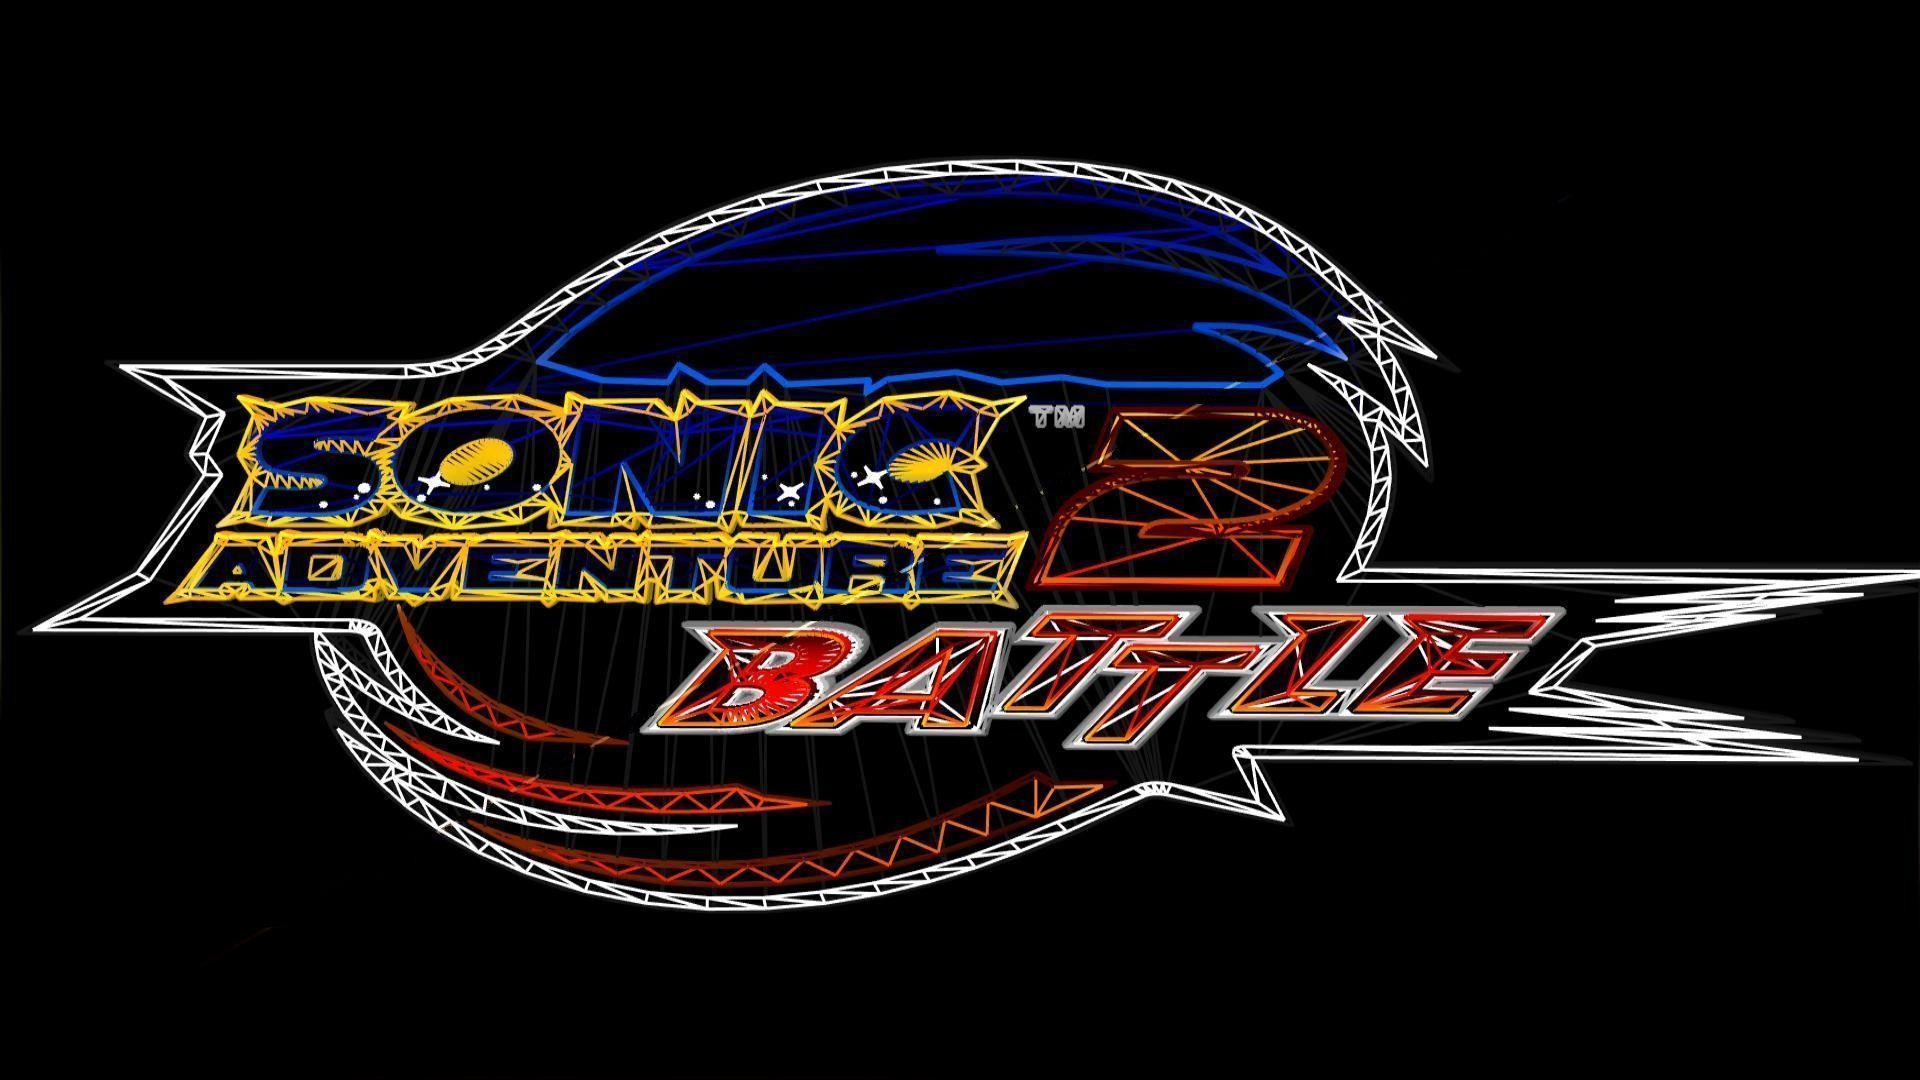 Sonic Adventure 2 Battle Logo